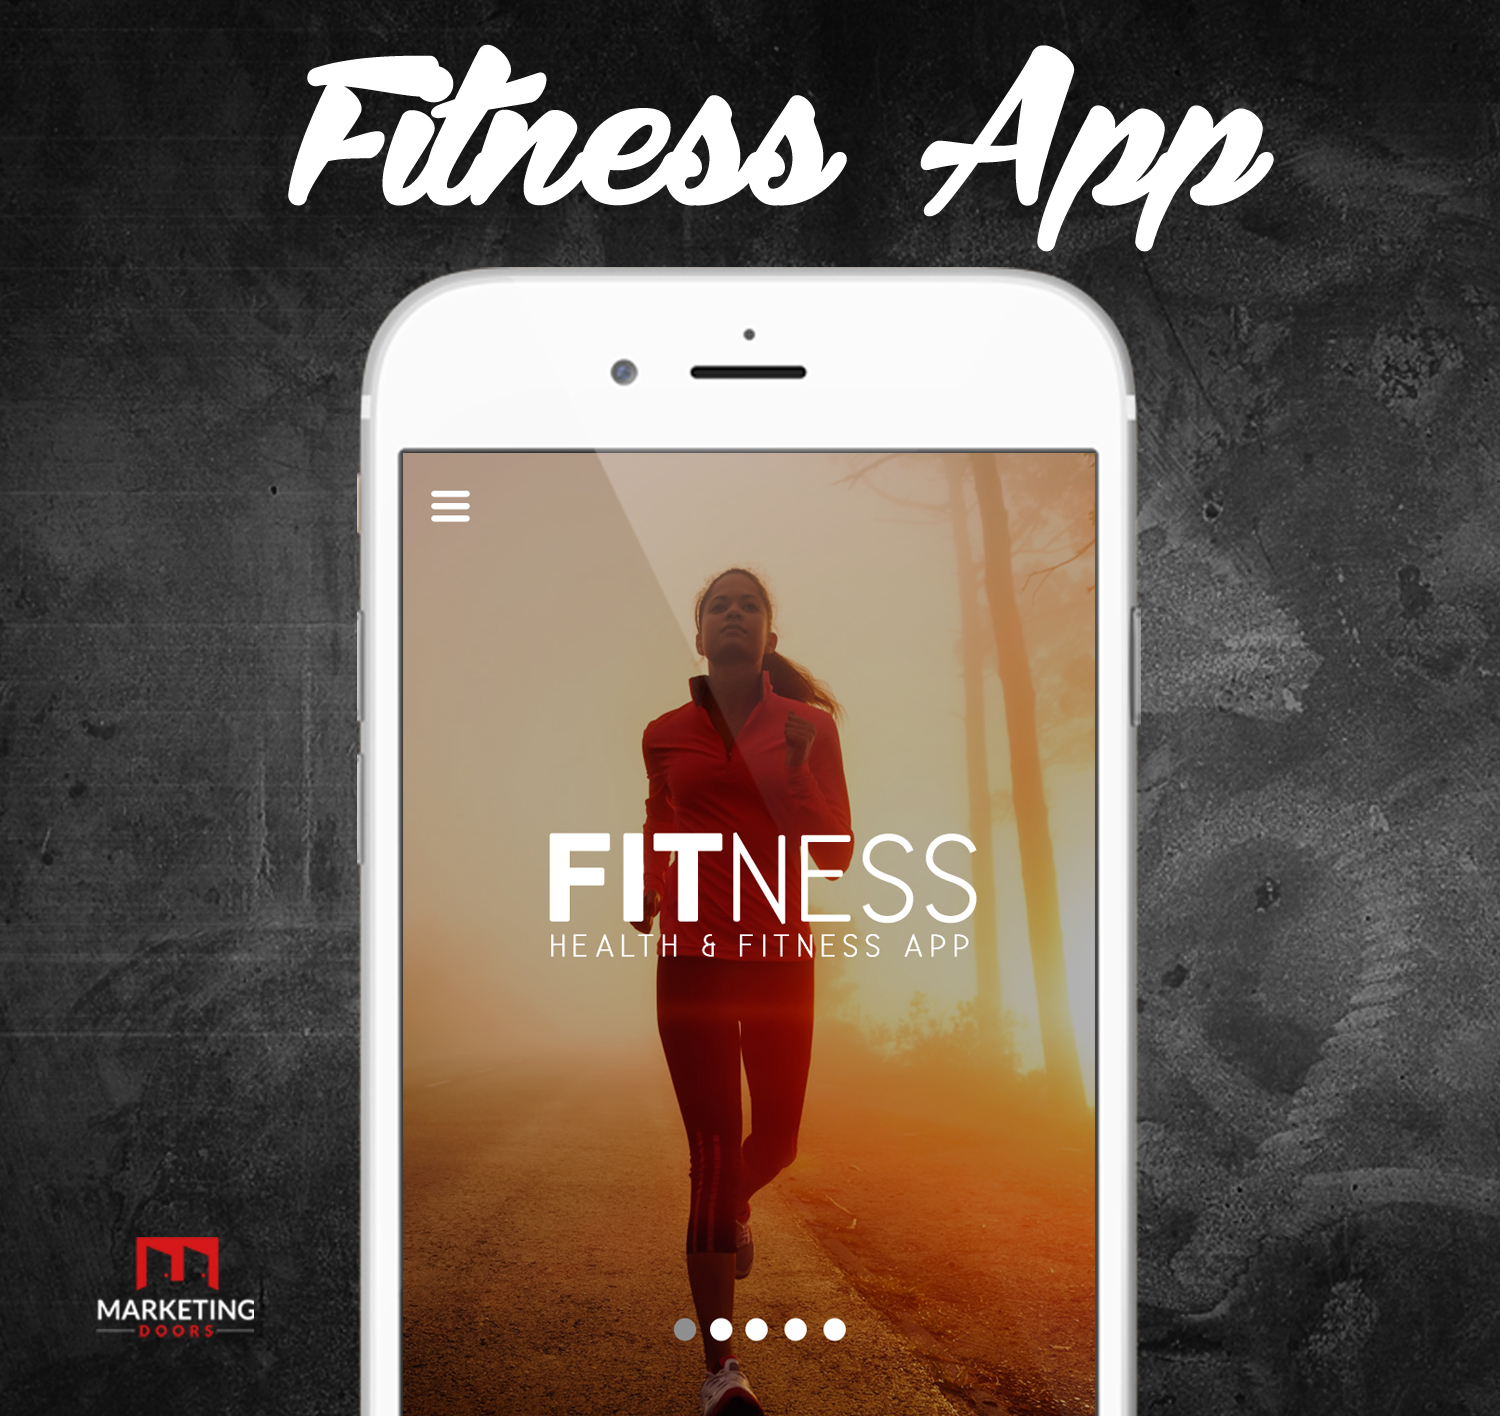 Health & Fitness app